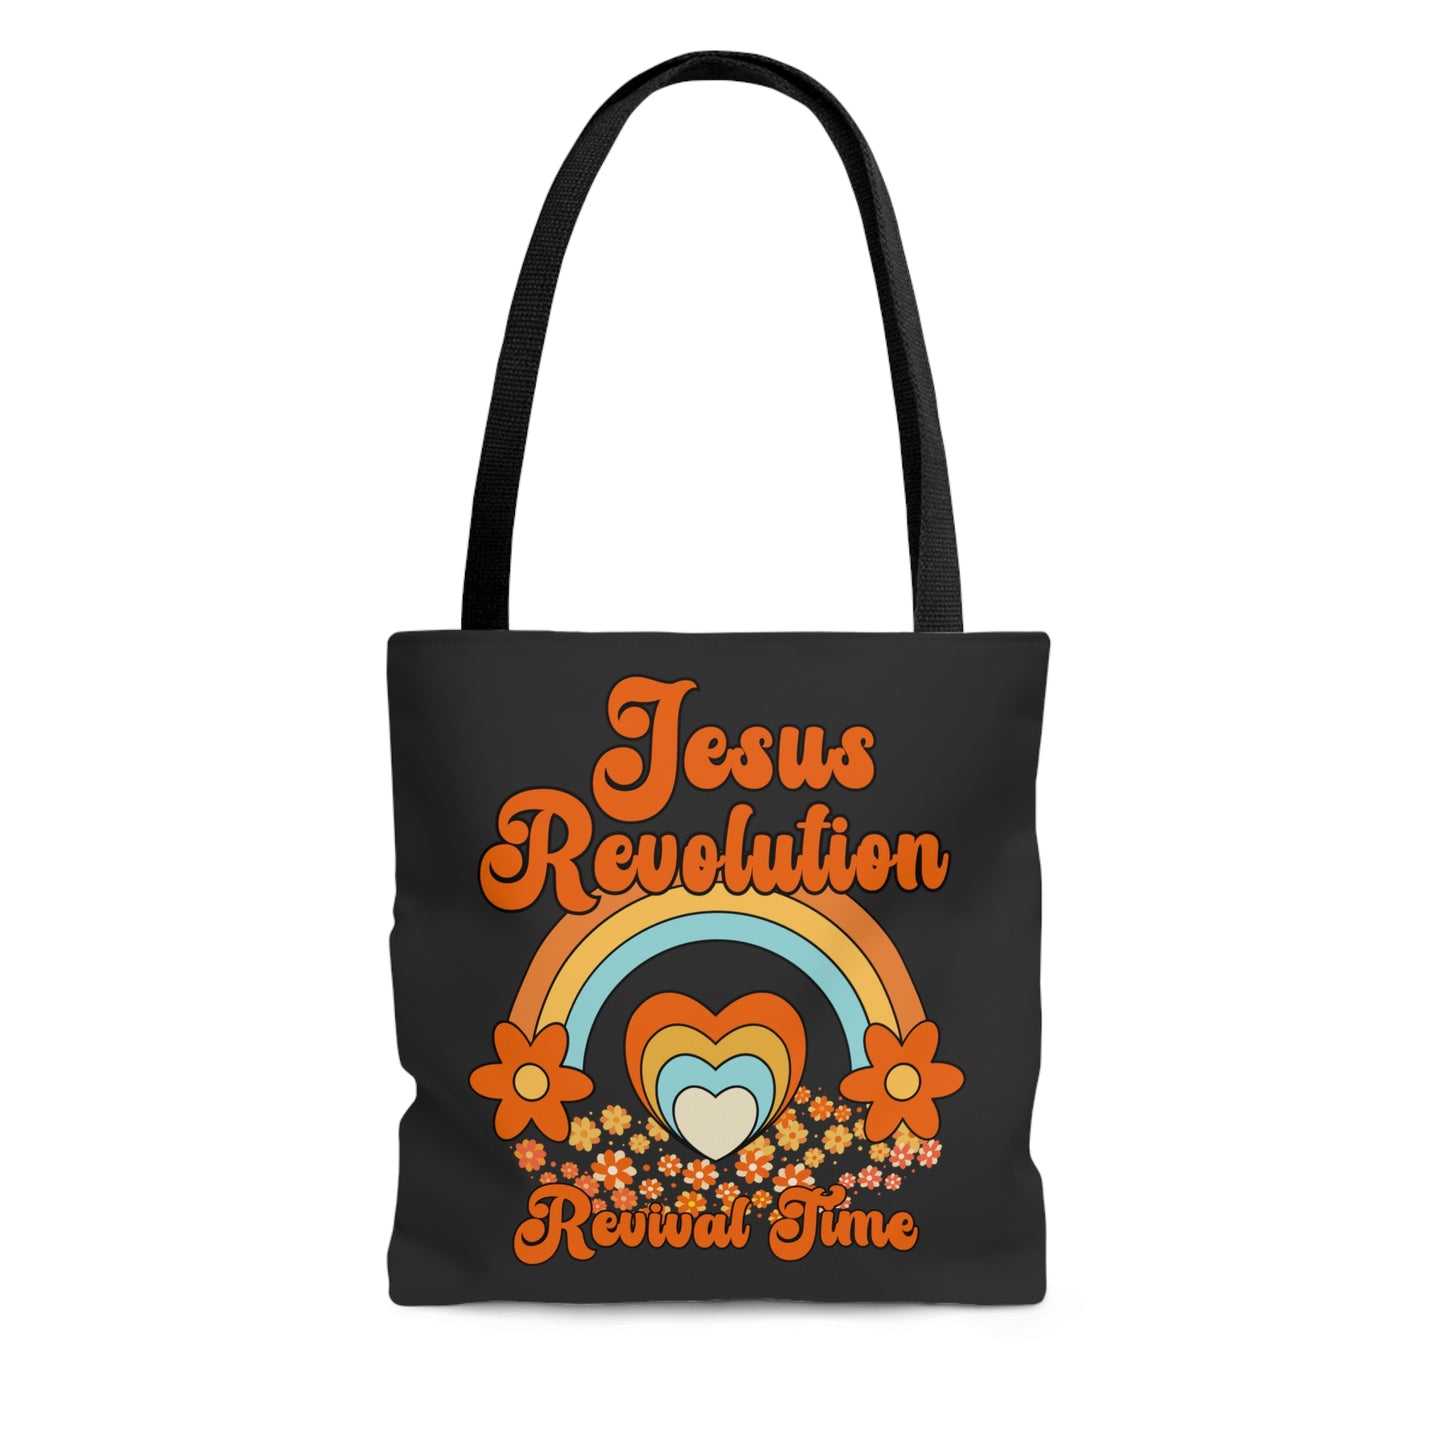 Jesus Revolution Revival Time Tote Bag - Retro Rainbow Heart